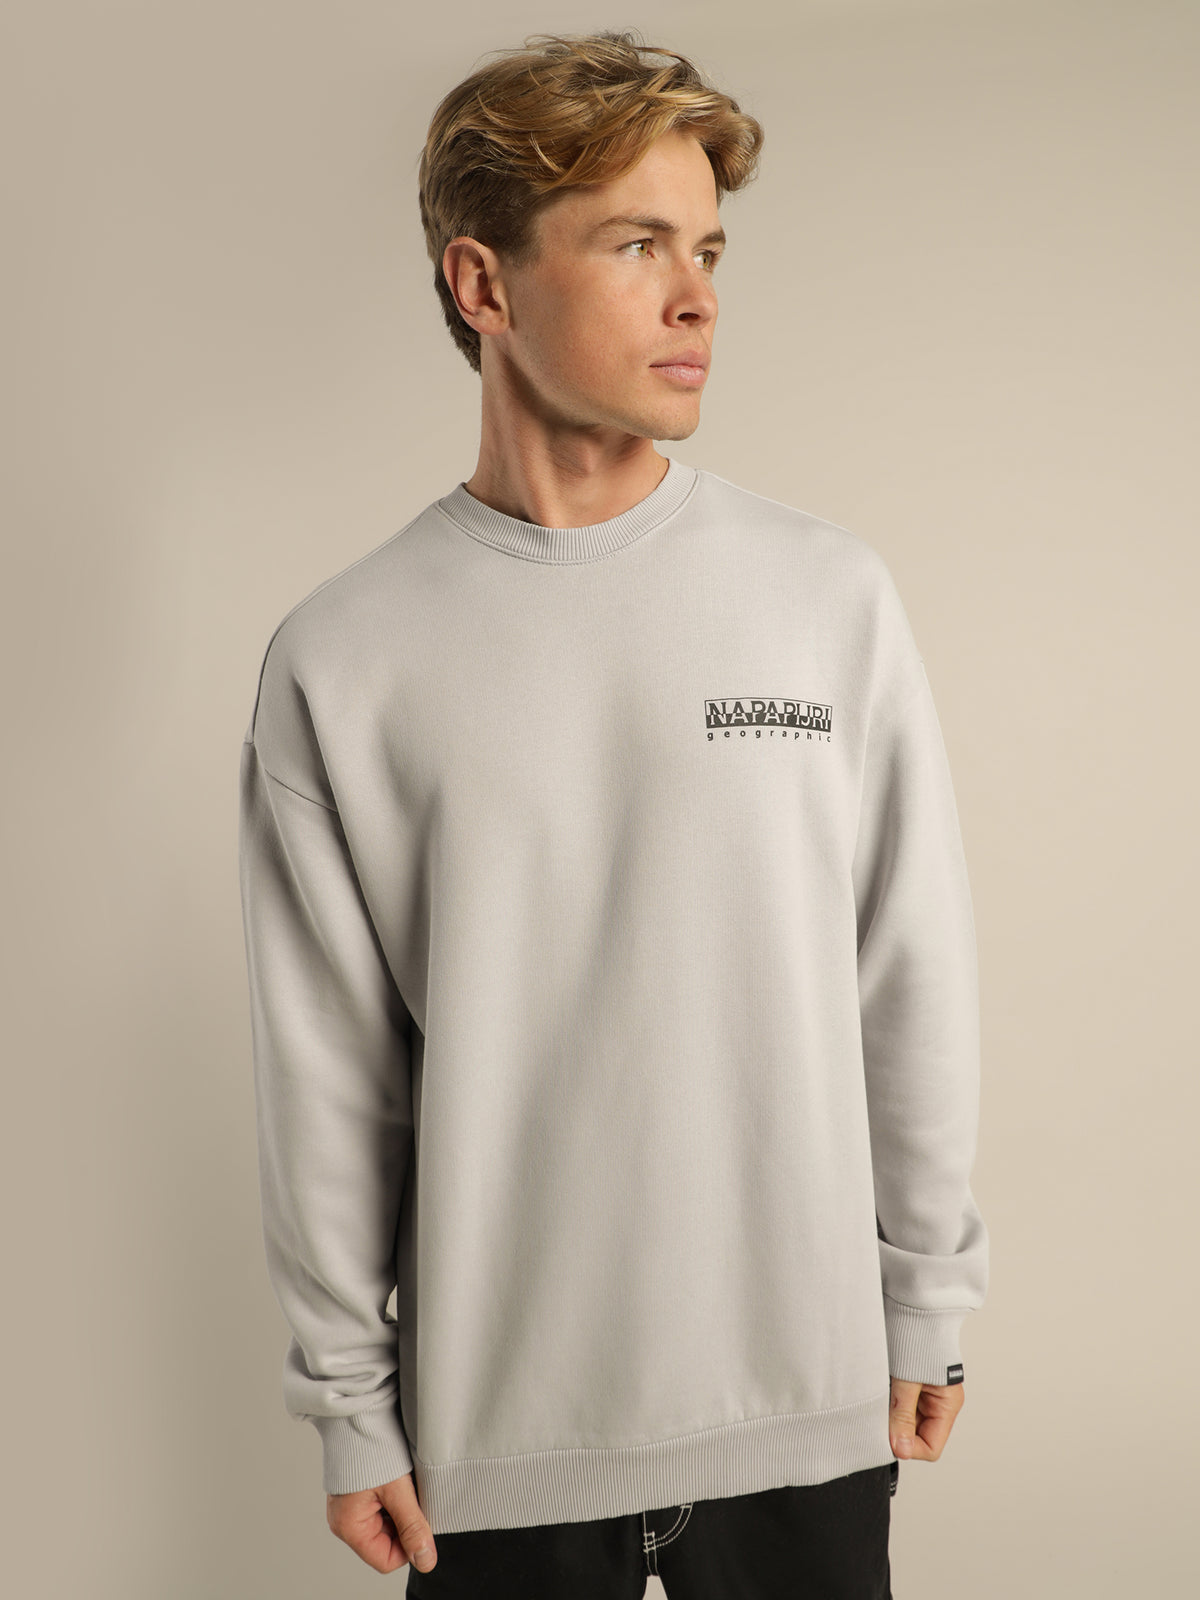 B Yoik C Sweatshirt in Grey